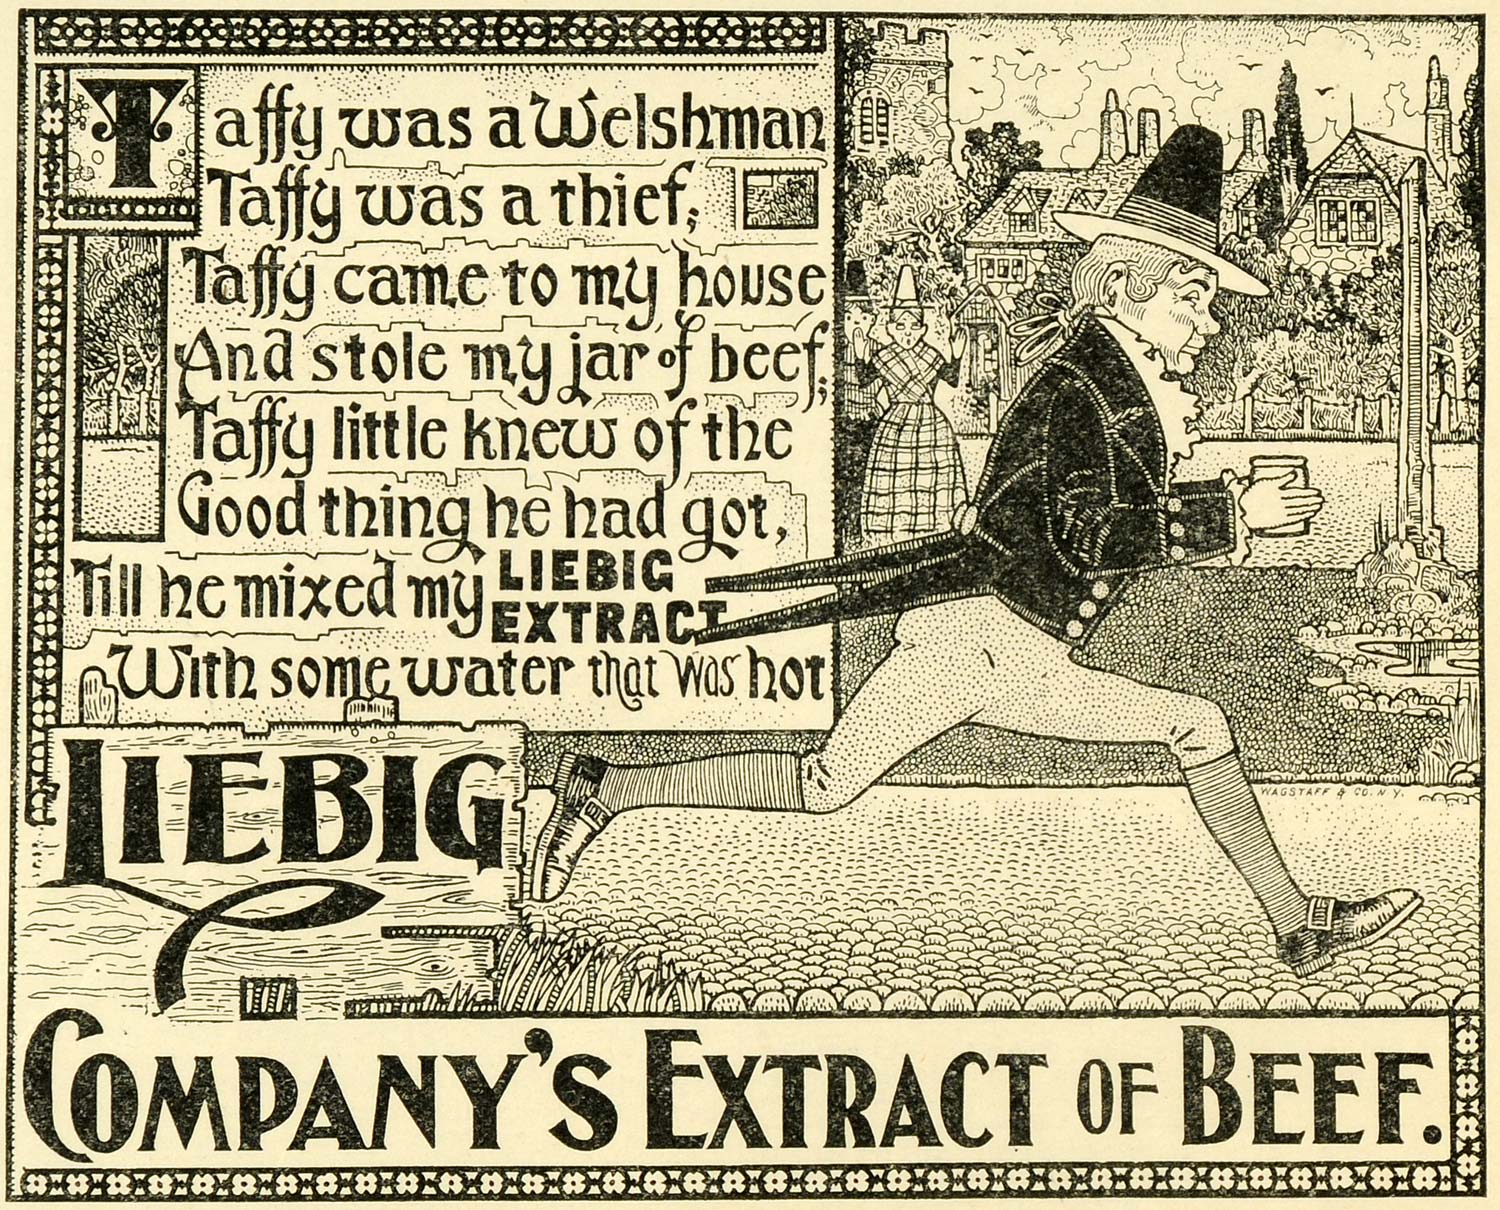 1897 Ad Liebig's Beef Extract Food Taffy Welsh Man Cobblestone Street LHJ6